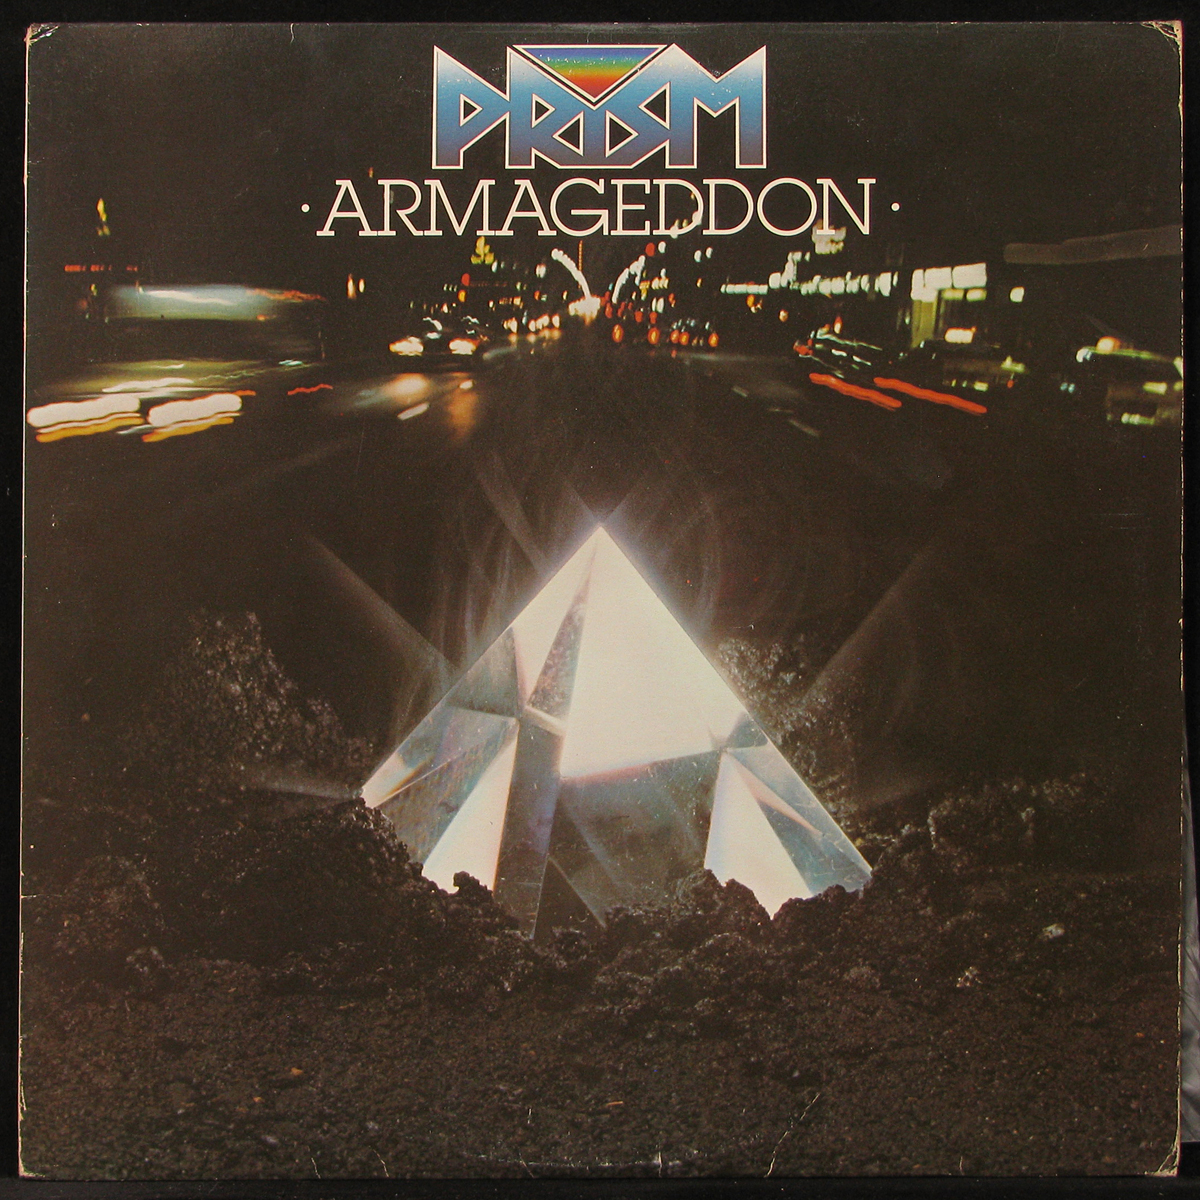 LP Prism — Armageddon фото